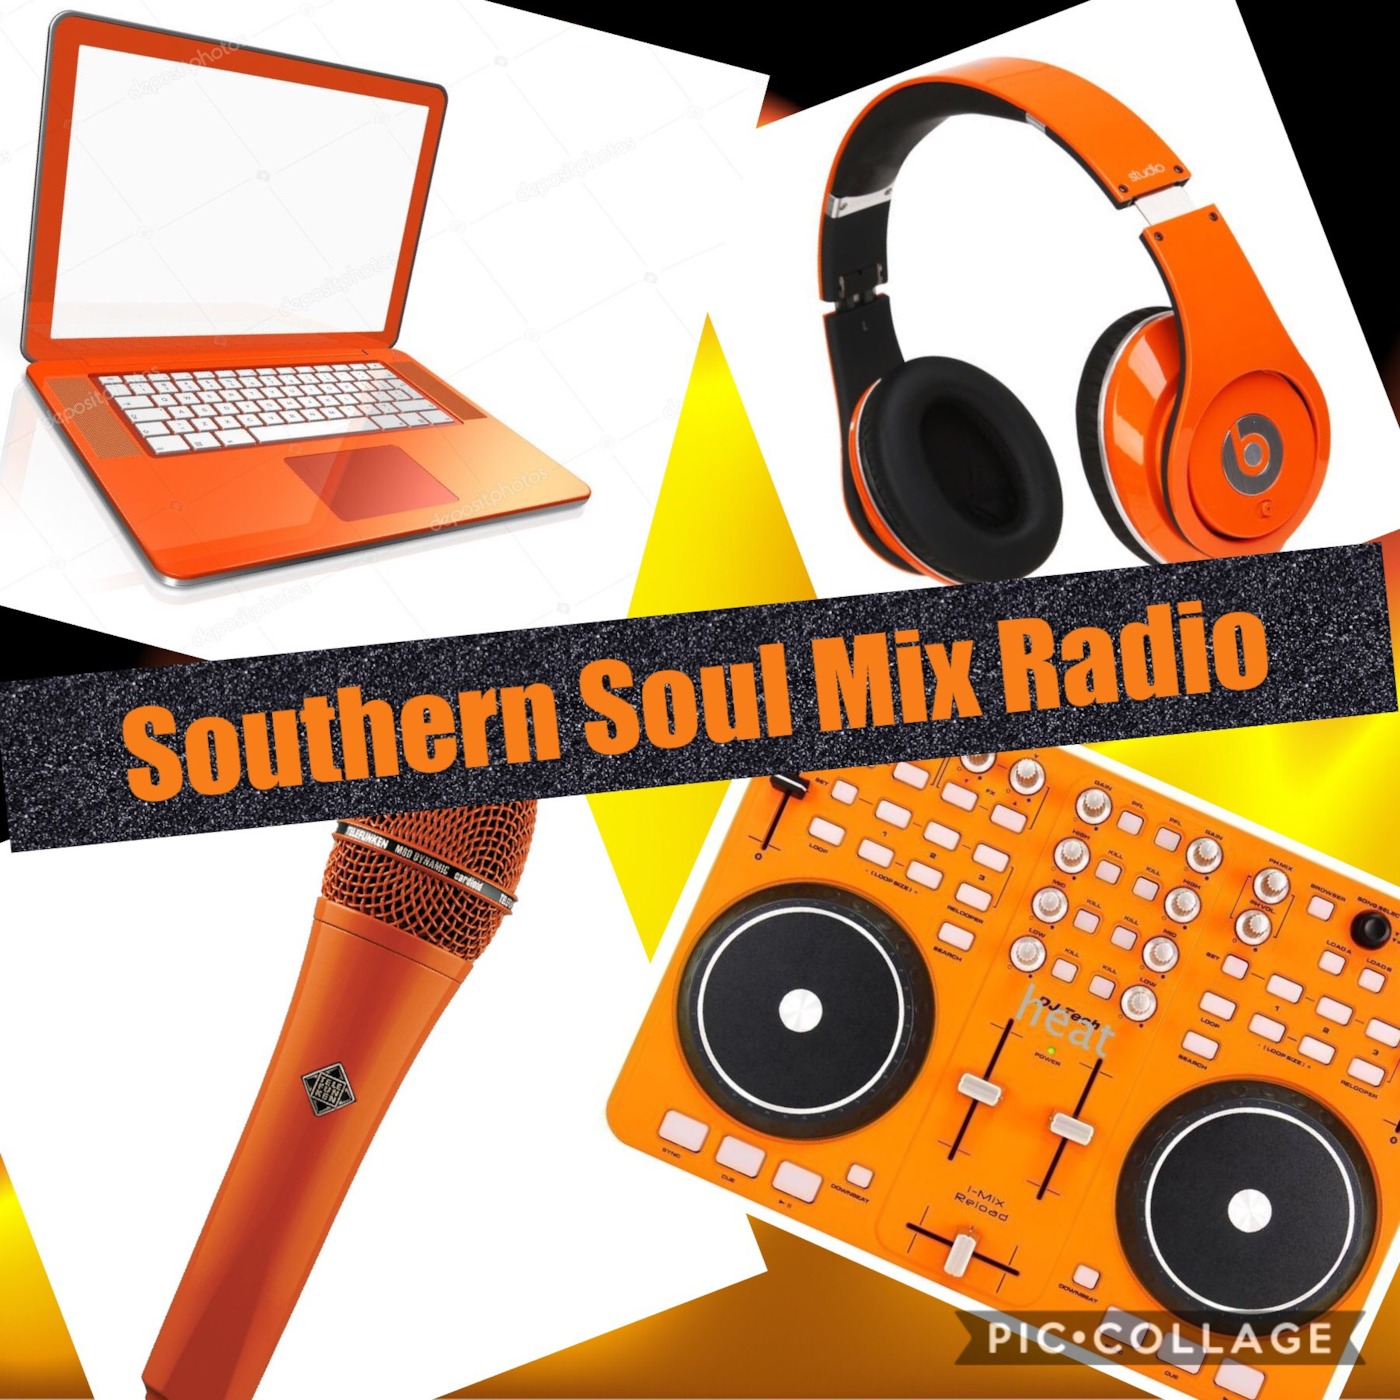 Southern Soul Mix Radio